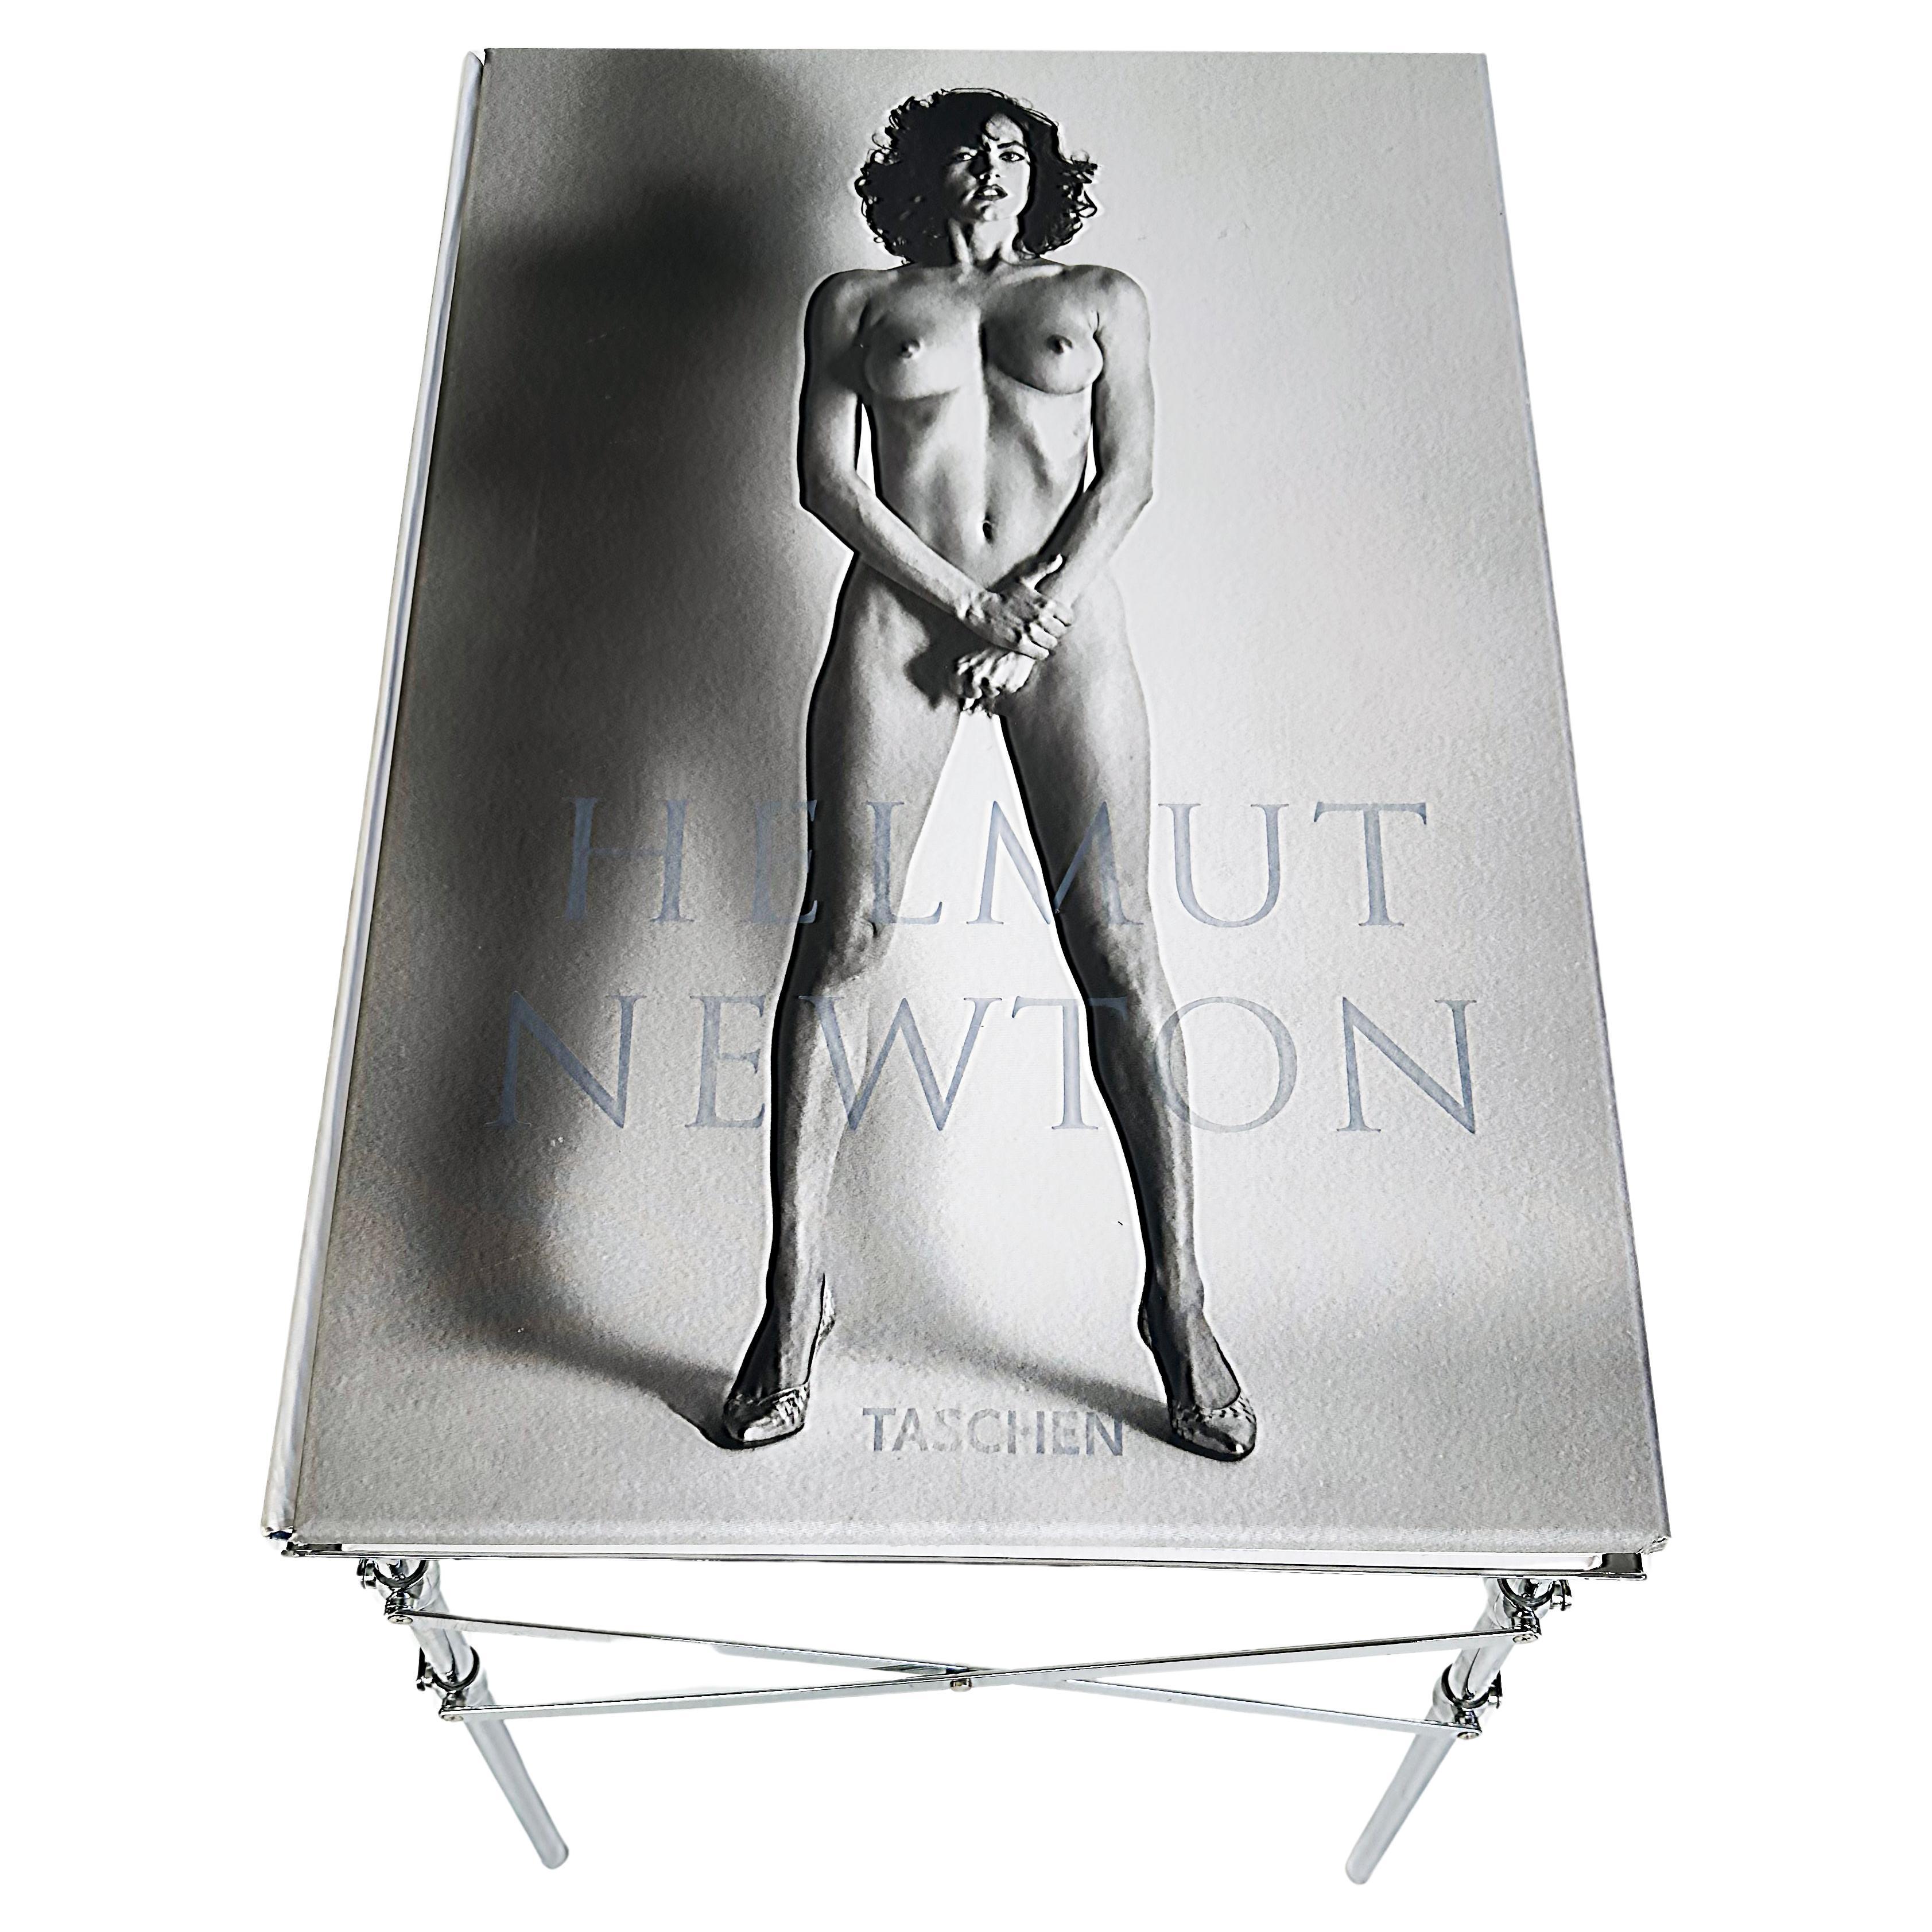 Helmut Newton Sumo Taschen Book, Philippe Starck Stand, Signed Limited Edition en vente